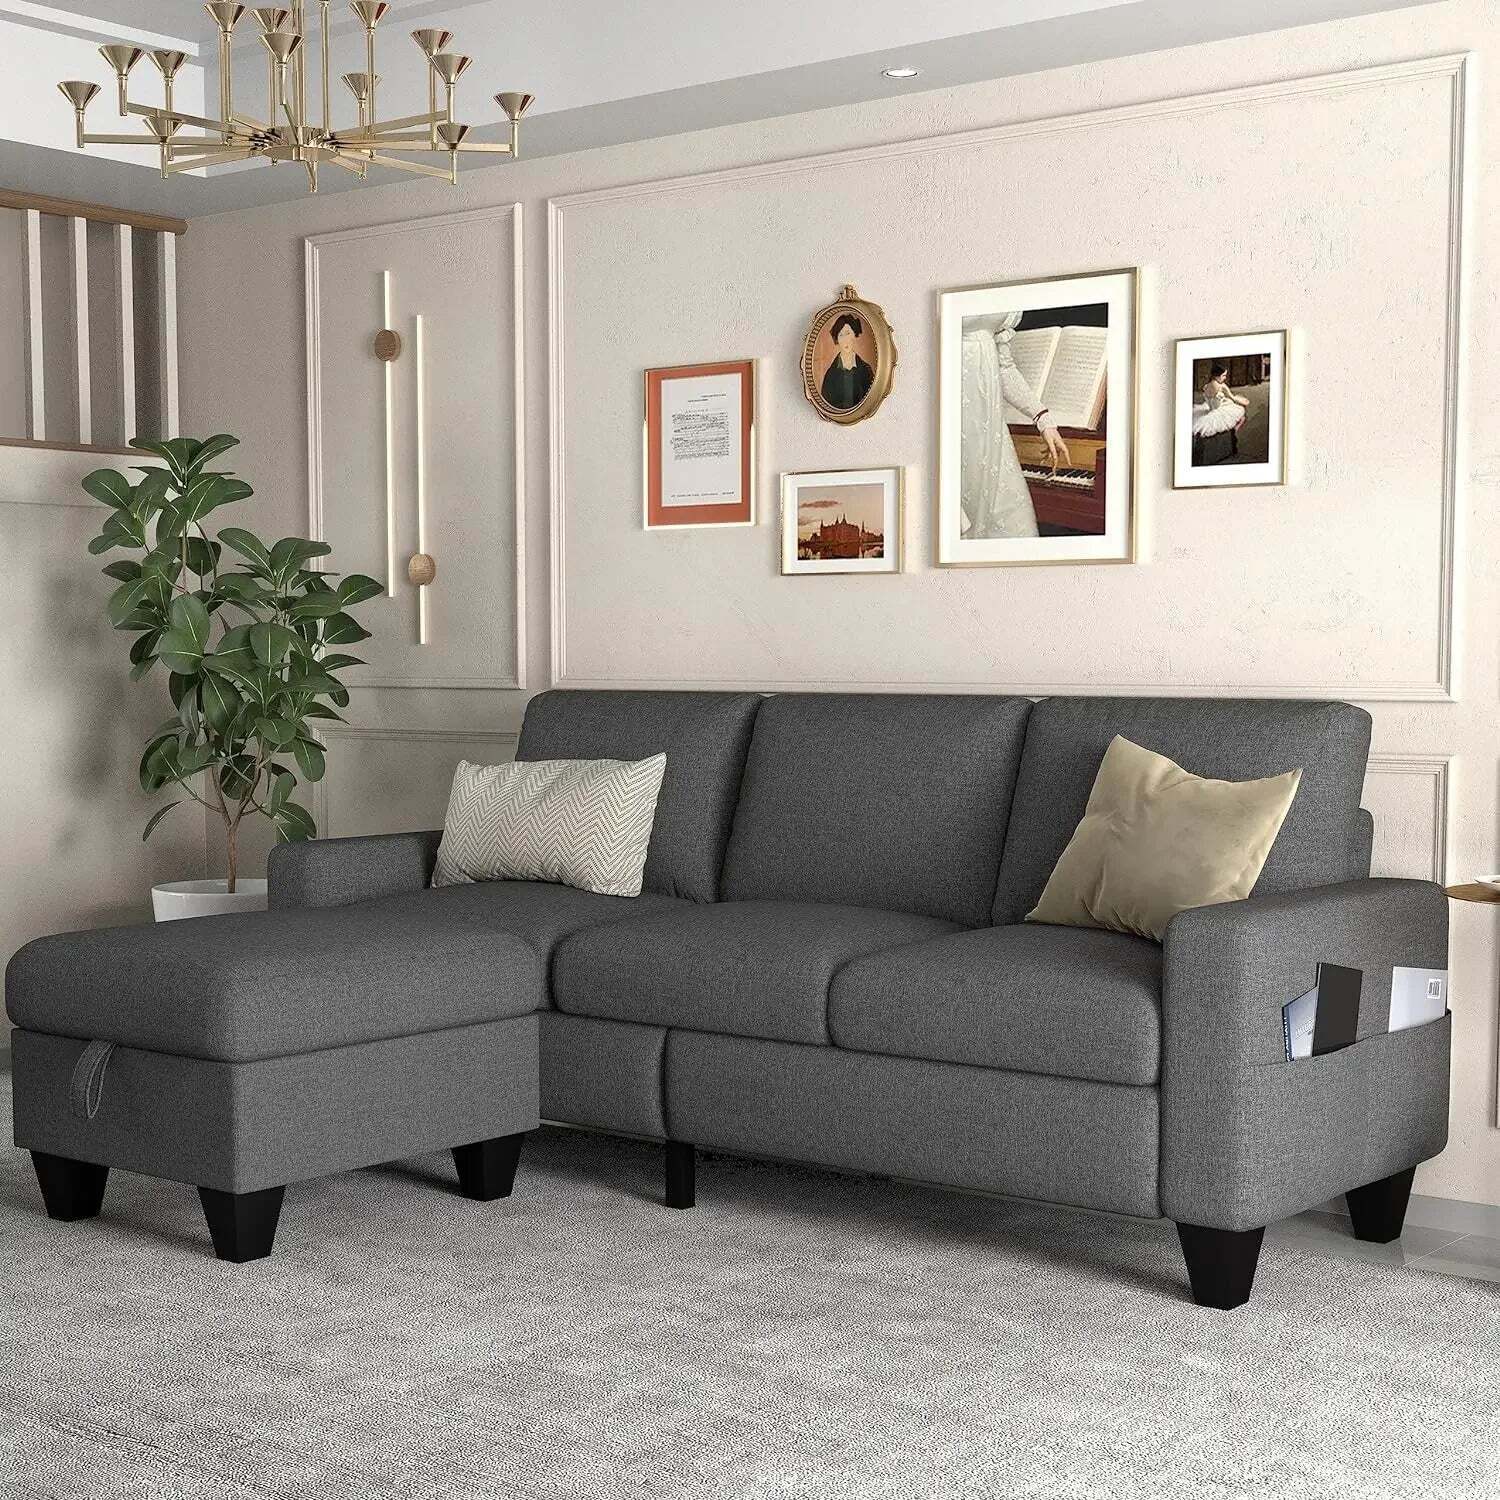 Living Room Sofa,Beige Linen Modern 3 Seater L Shaped Upholstered Furniture,Reve